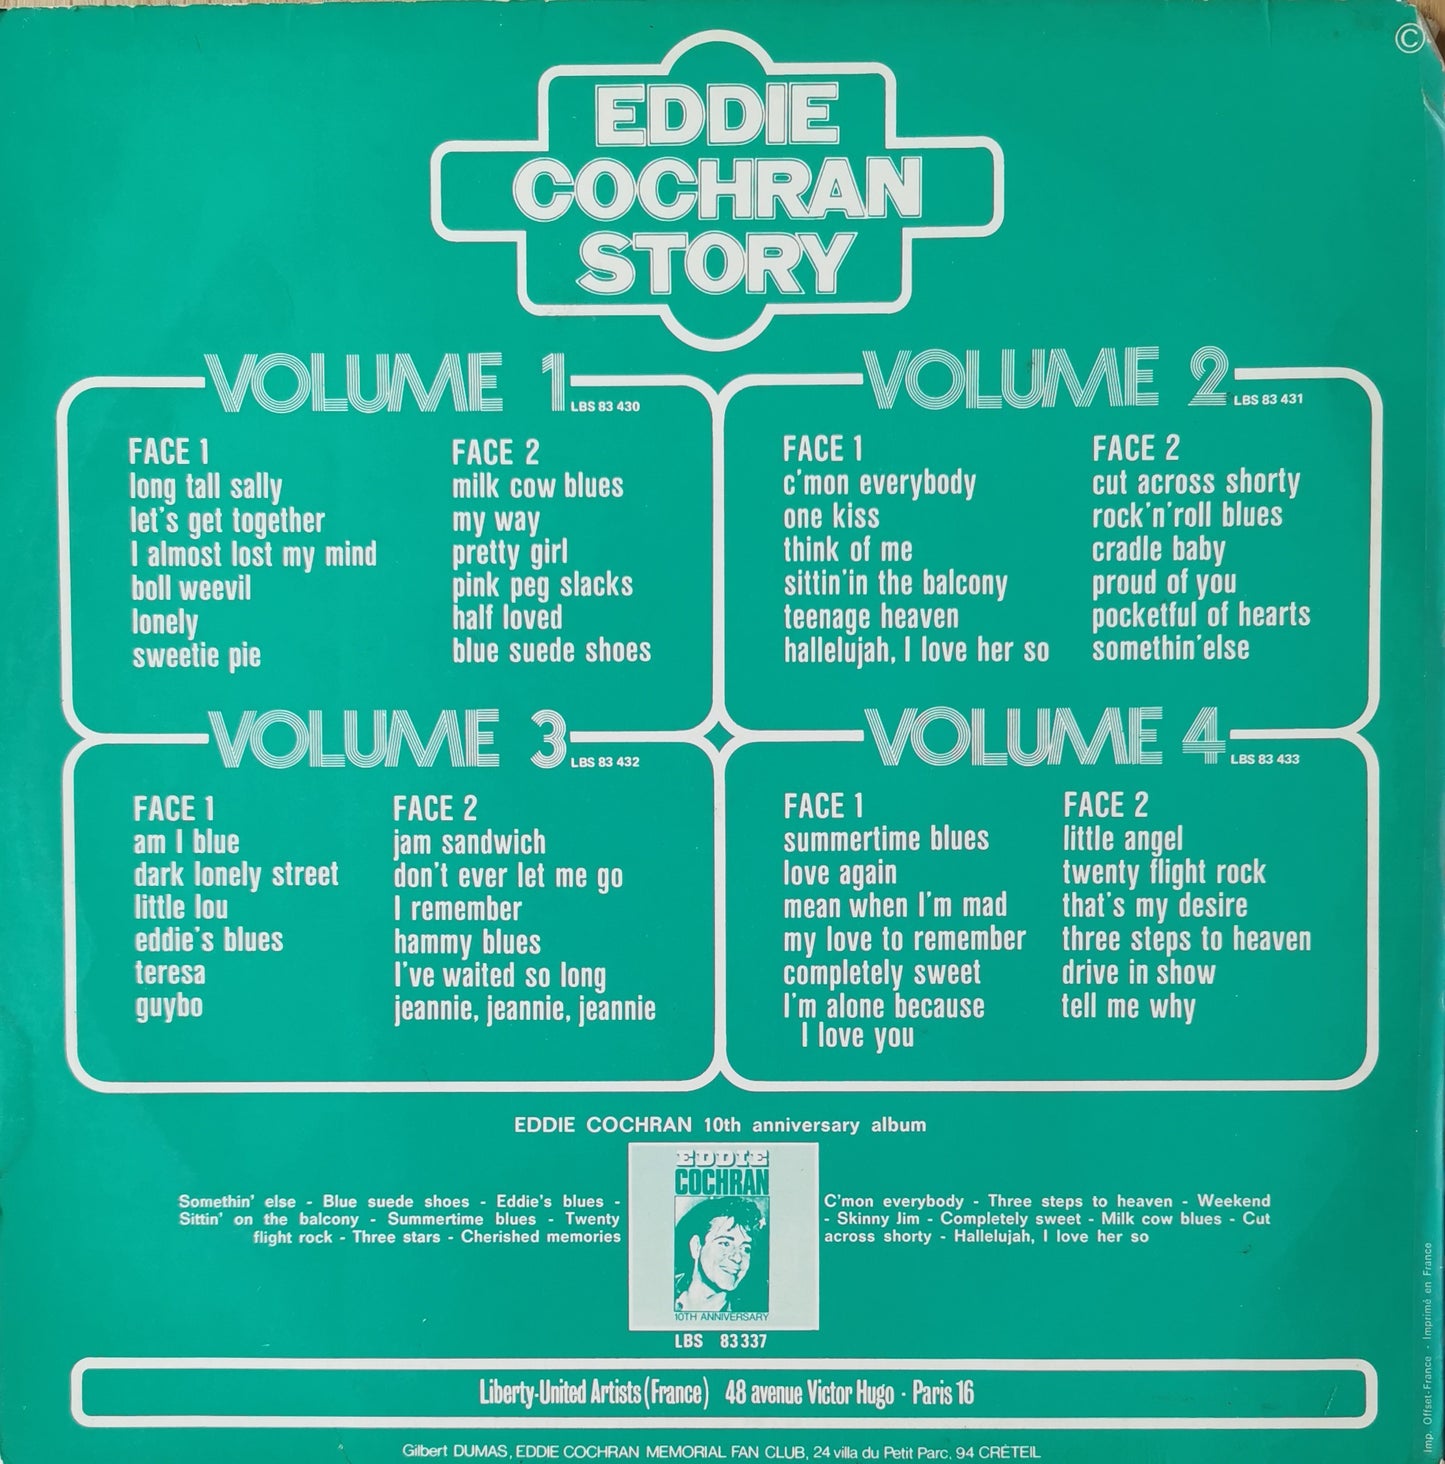 EDDIE COCHRAN - Story Volume 1